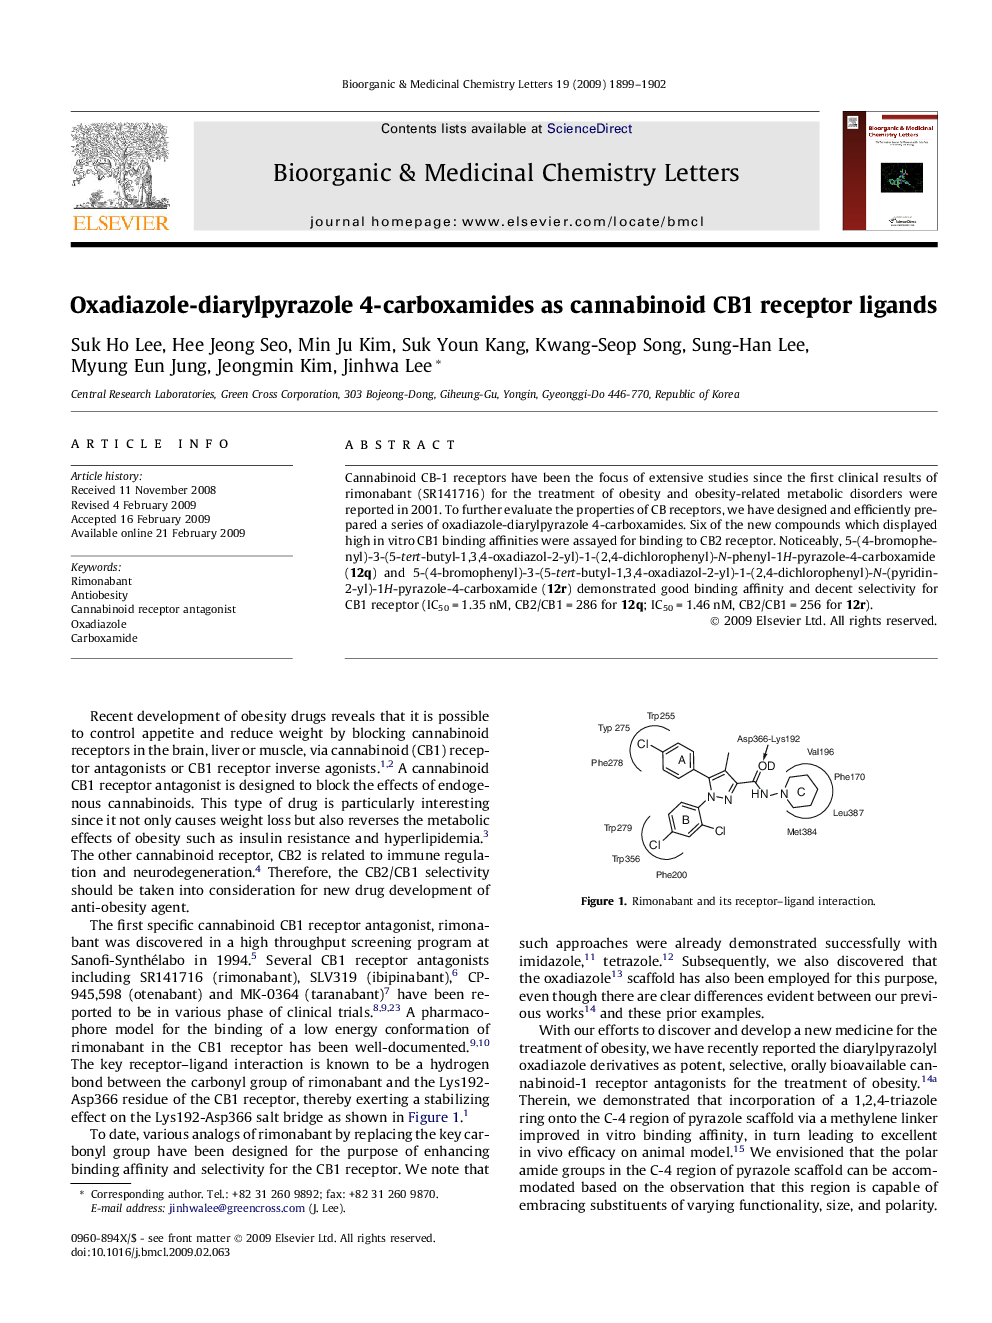 Oxadiazole-diarylpyrazole 4-carboxamides as cannabinoid CB1 receptor ligands